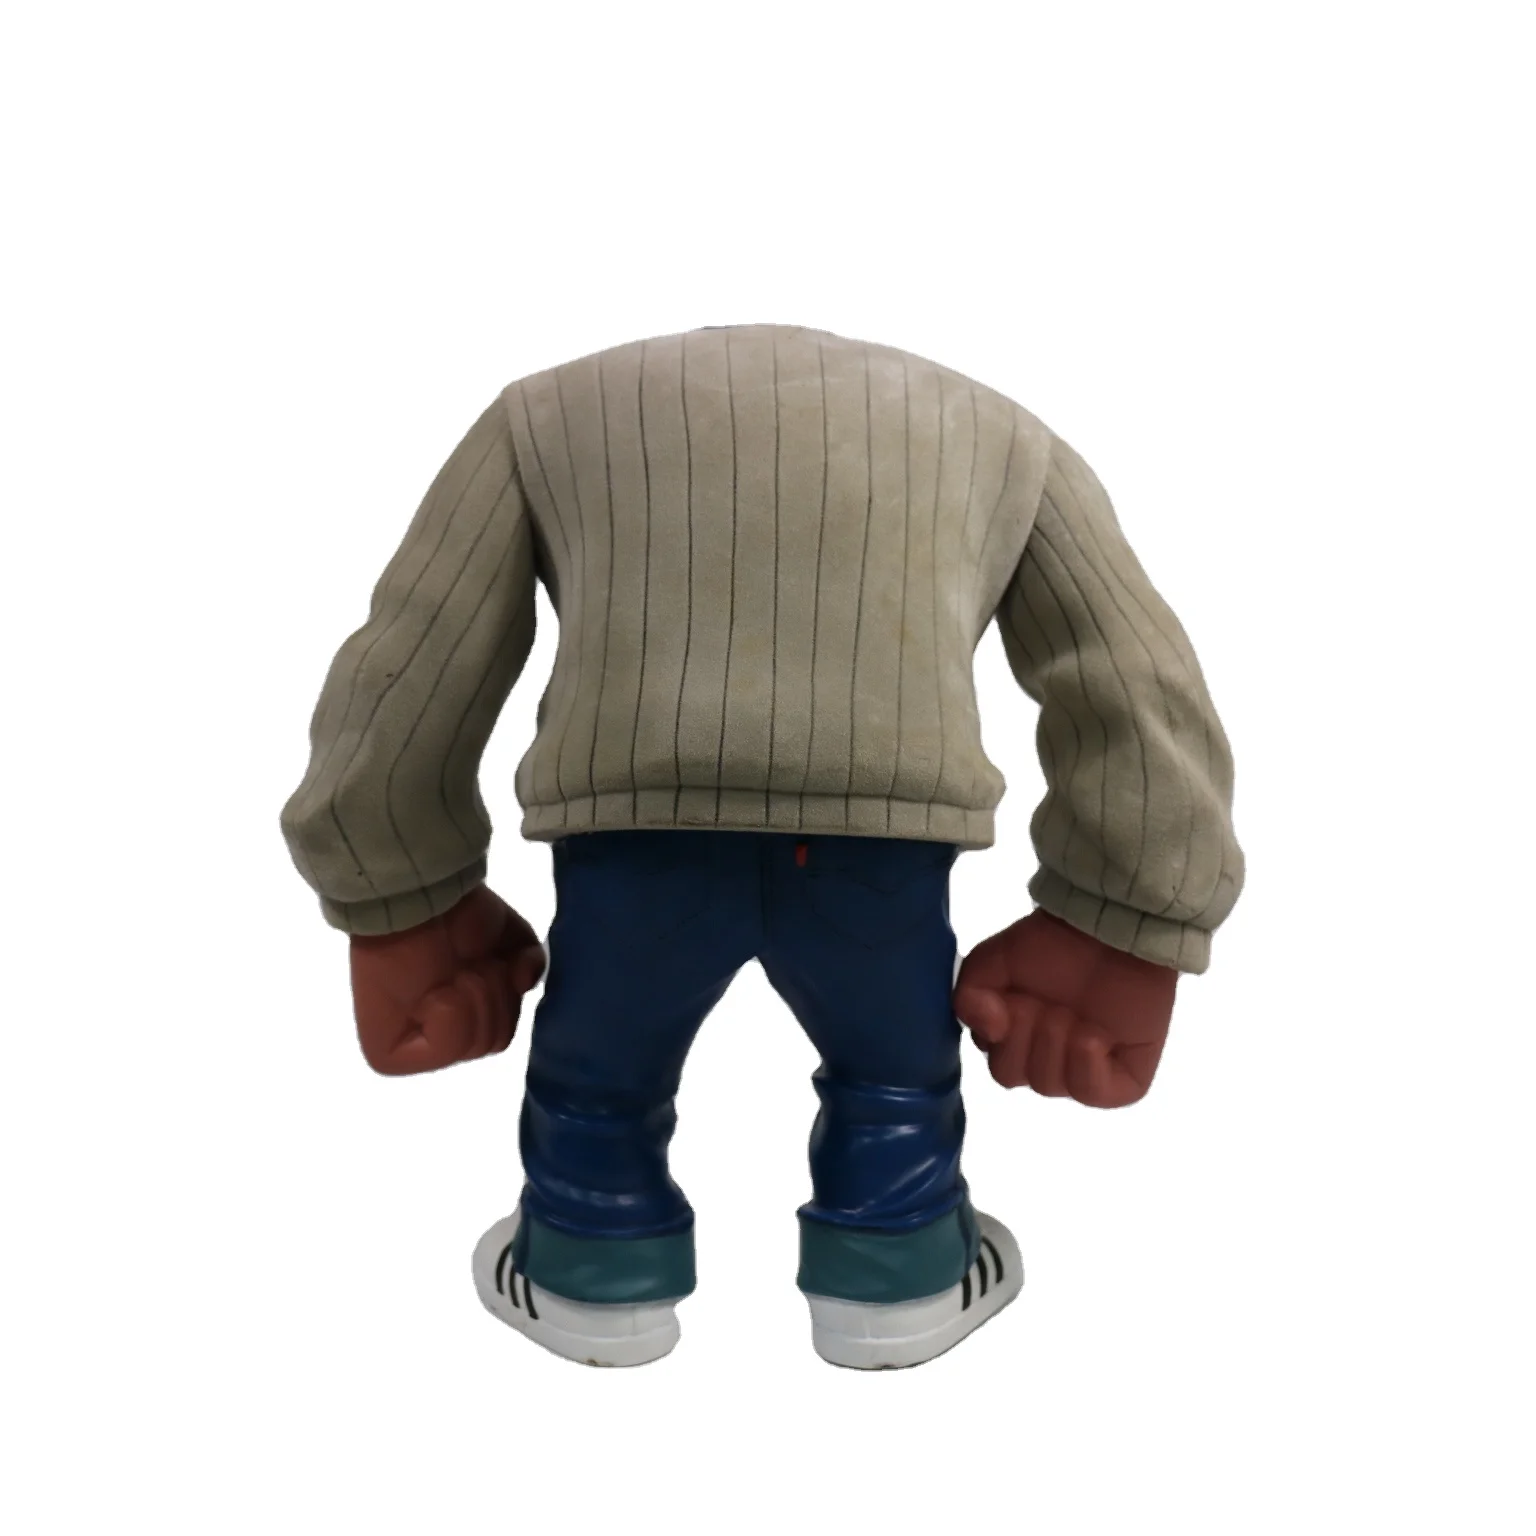 
Resin model figure high quality 3D figurine custom polyresin statue figure 